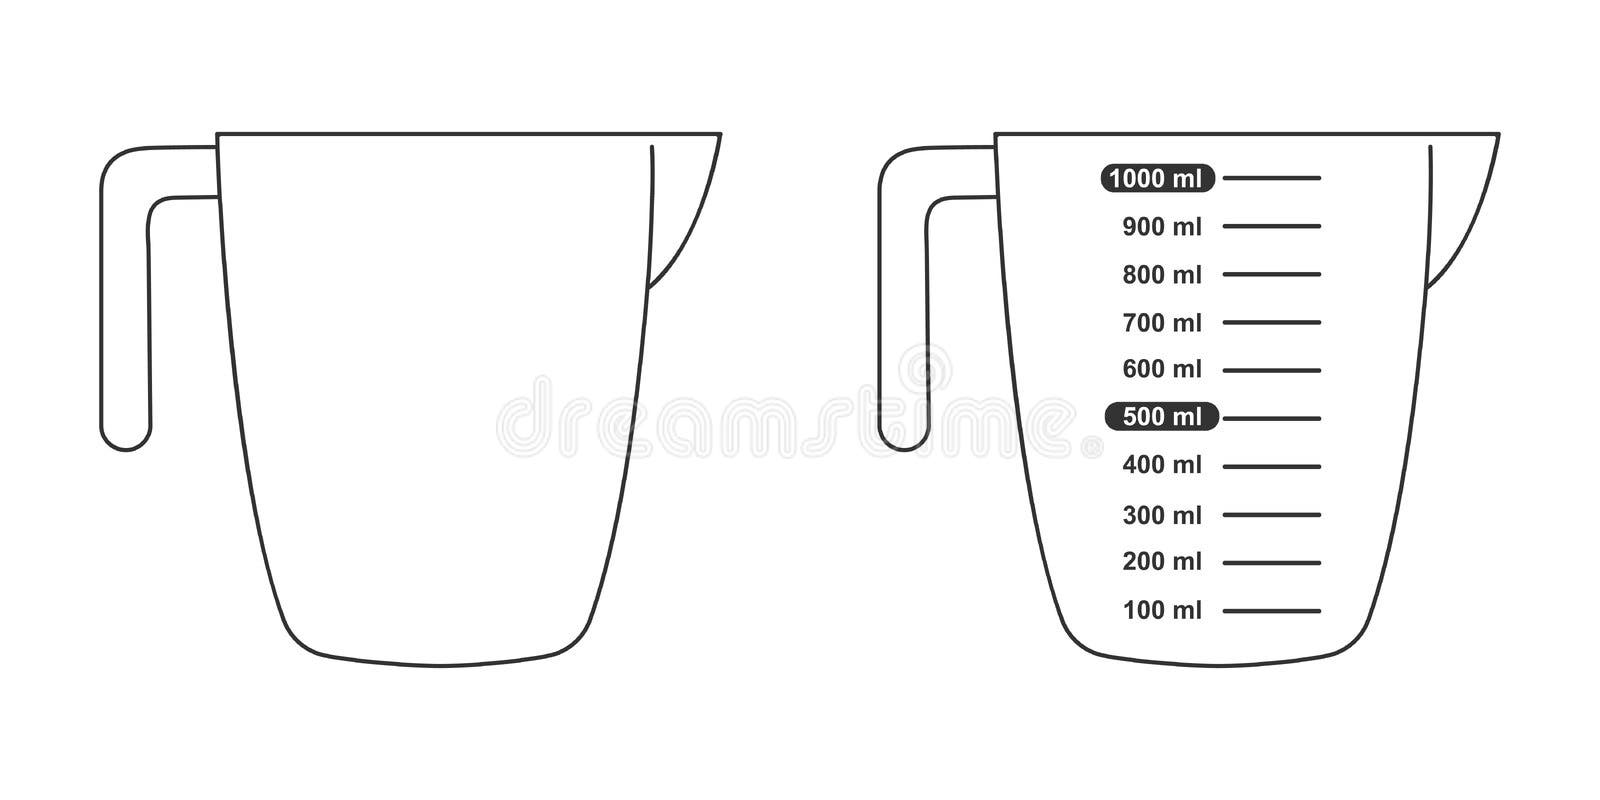 Scale 450 Ml Liquid Volume. Measuring Cup or Jug To Preparing